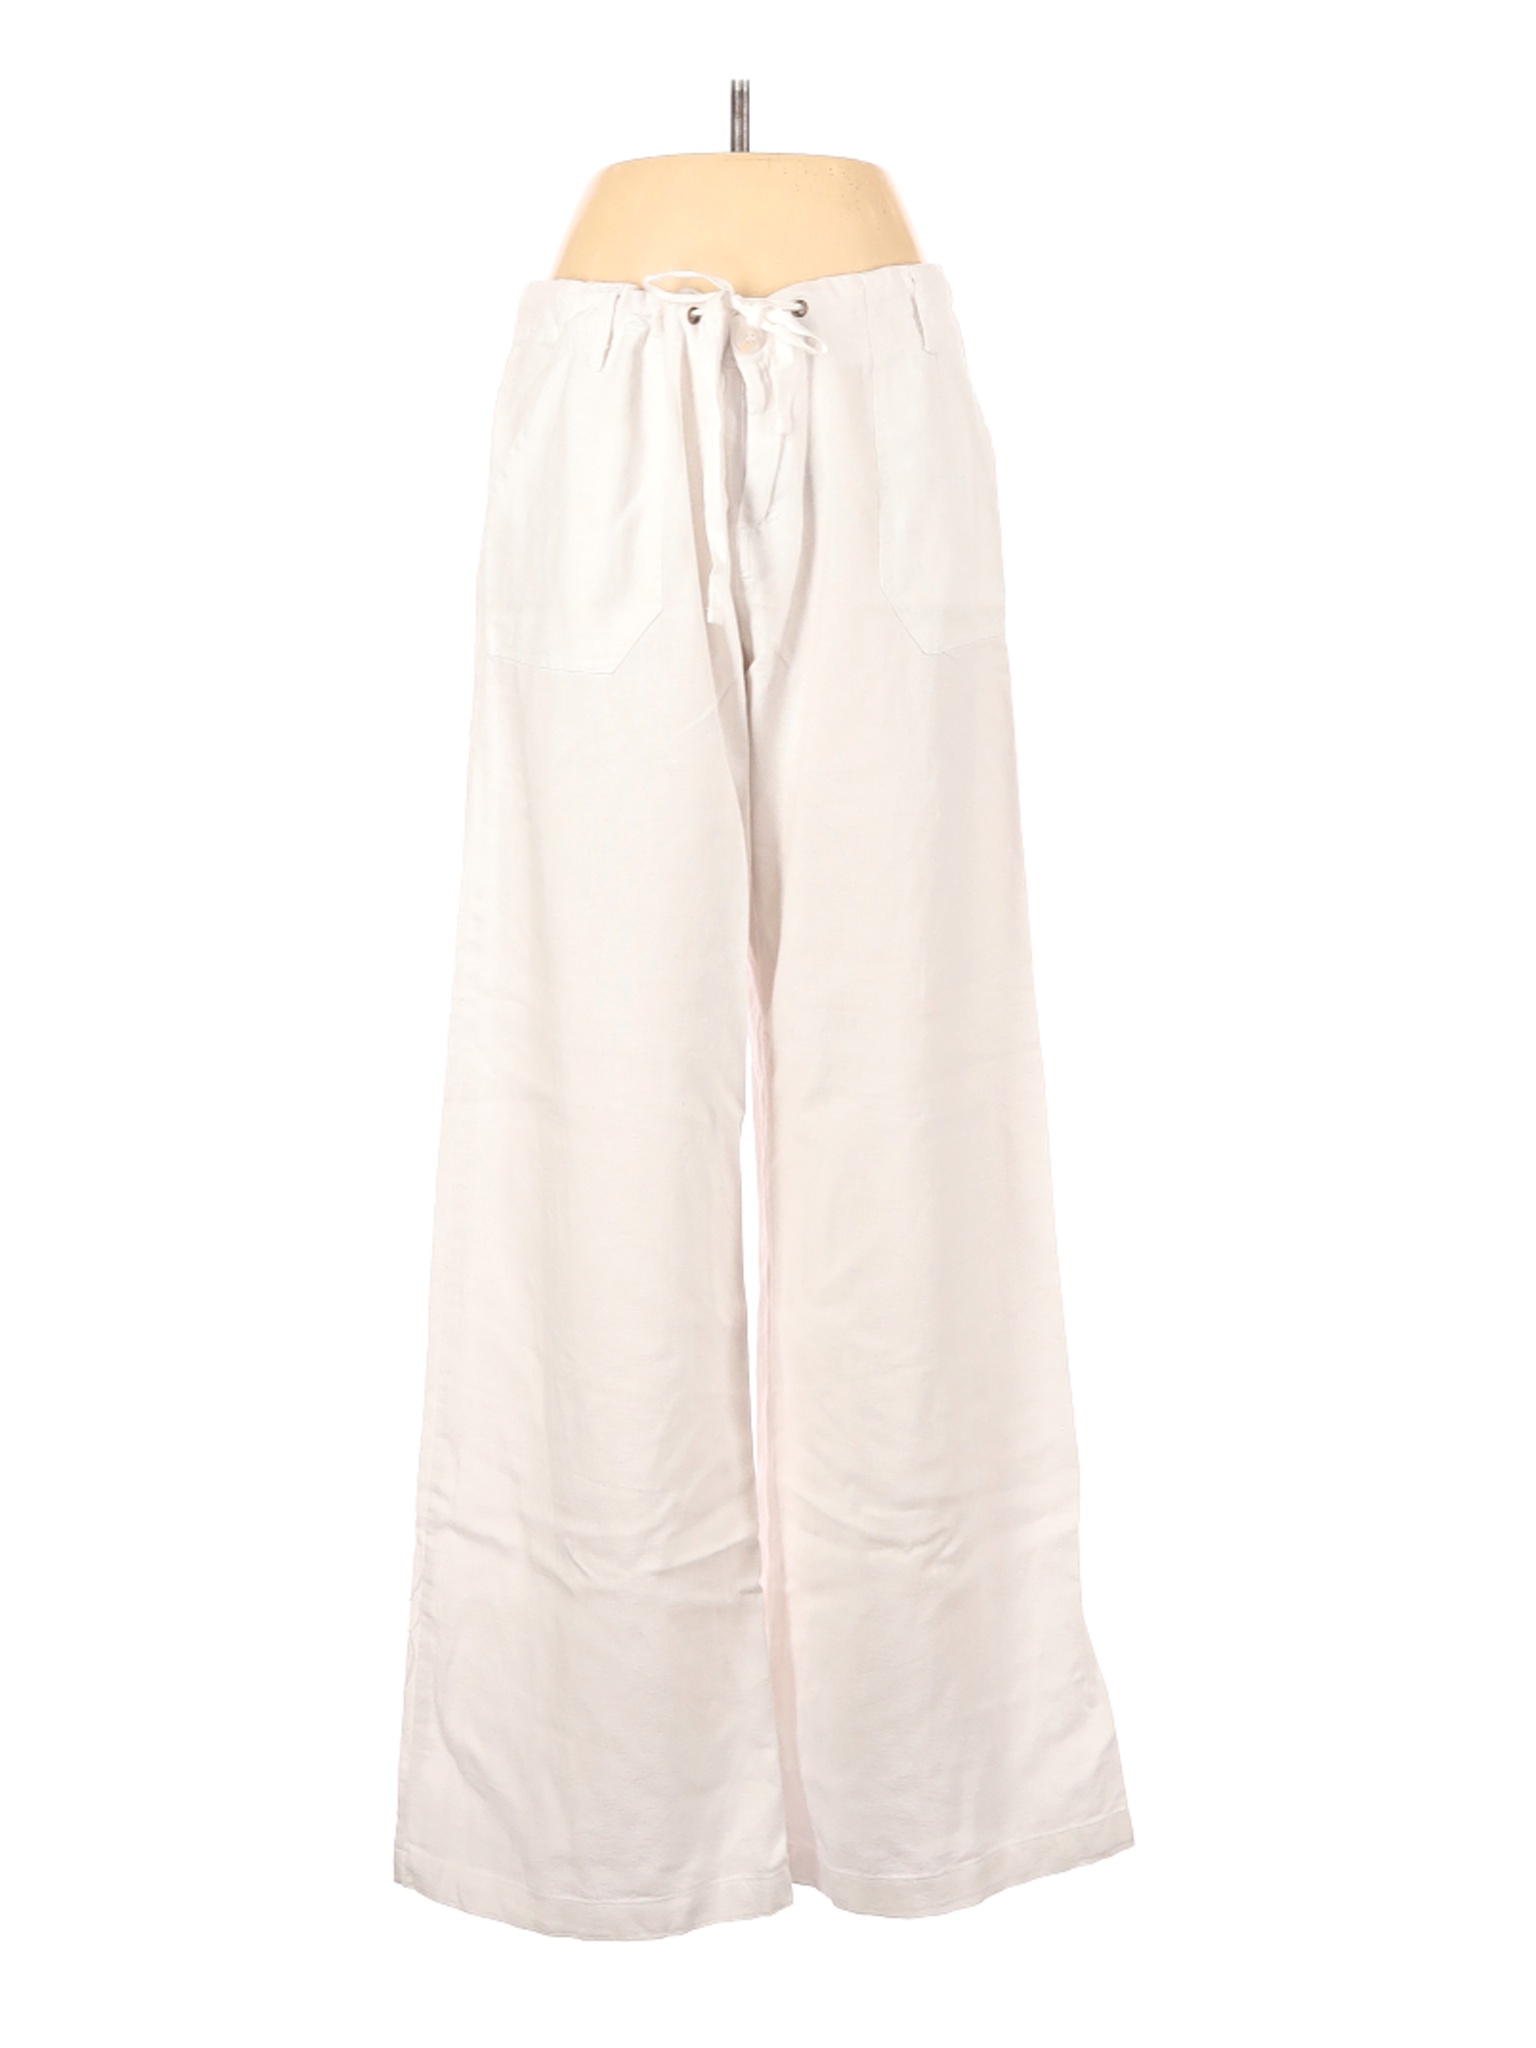 Just Living Women Ivory Linen Pants L | eBay